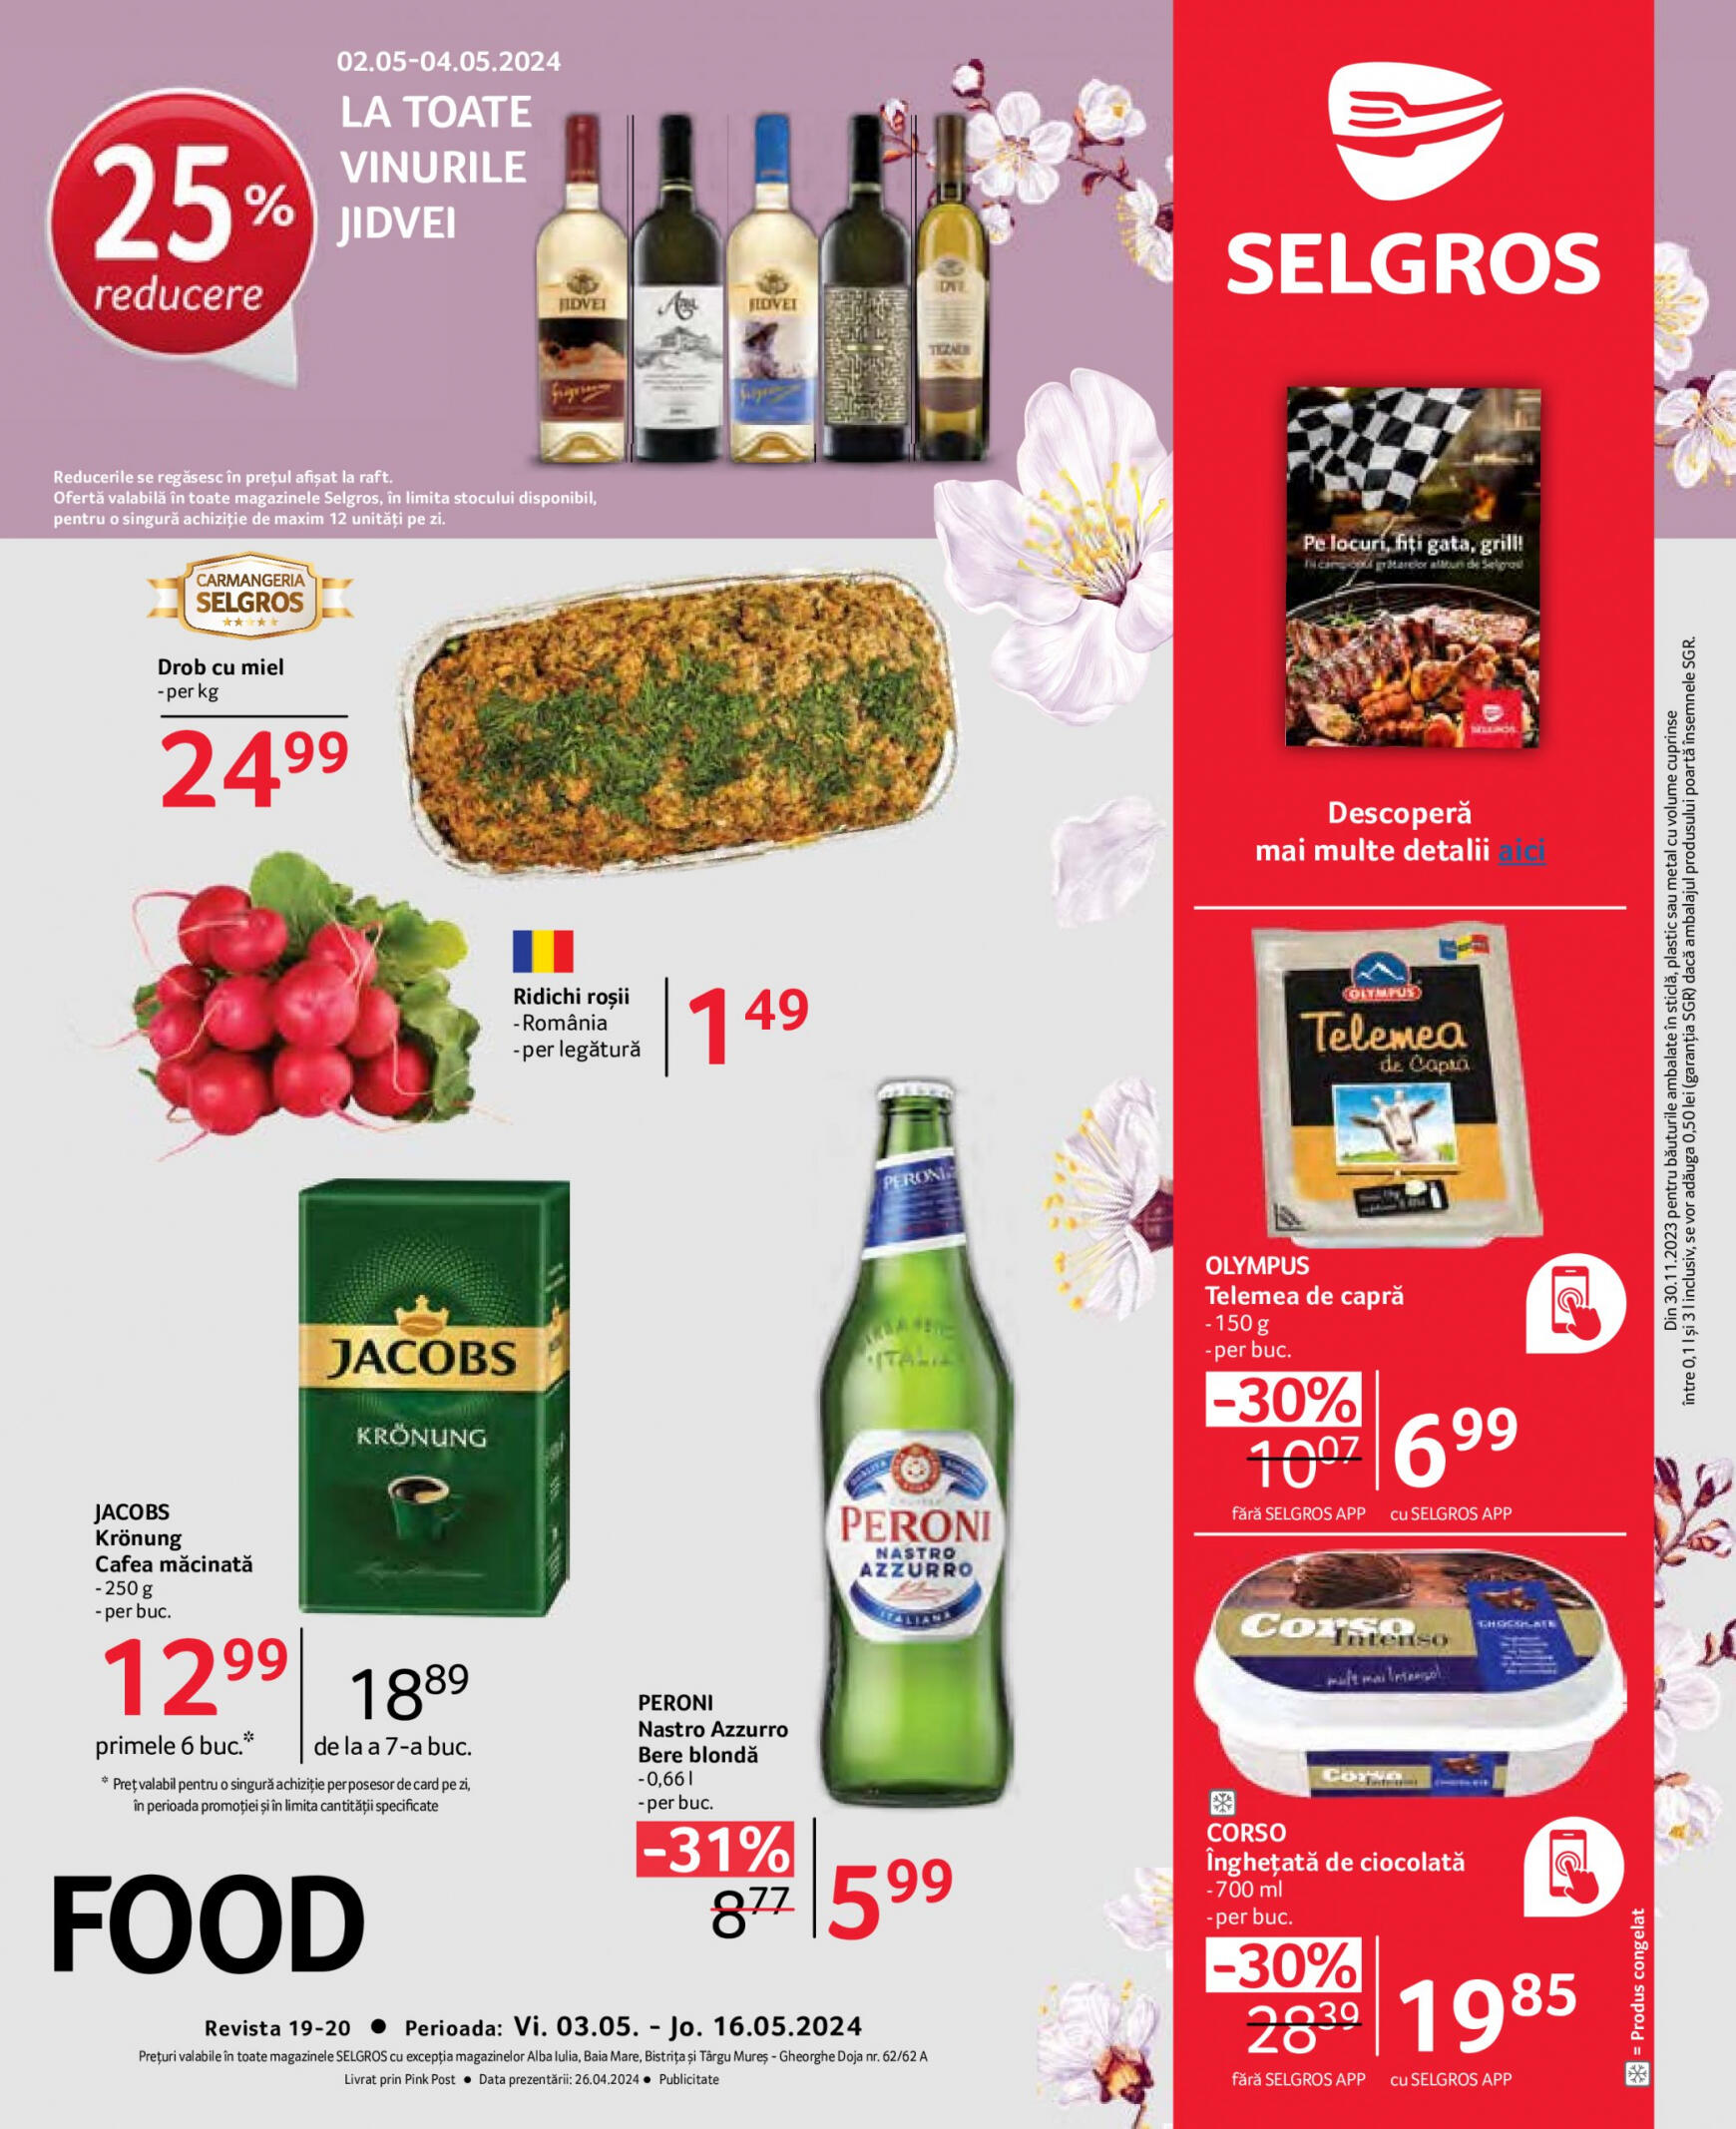 selgros - Catalog nou Selgros - Food 03.05. - 16.05.